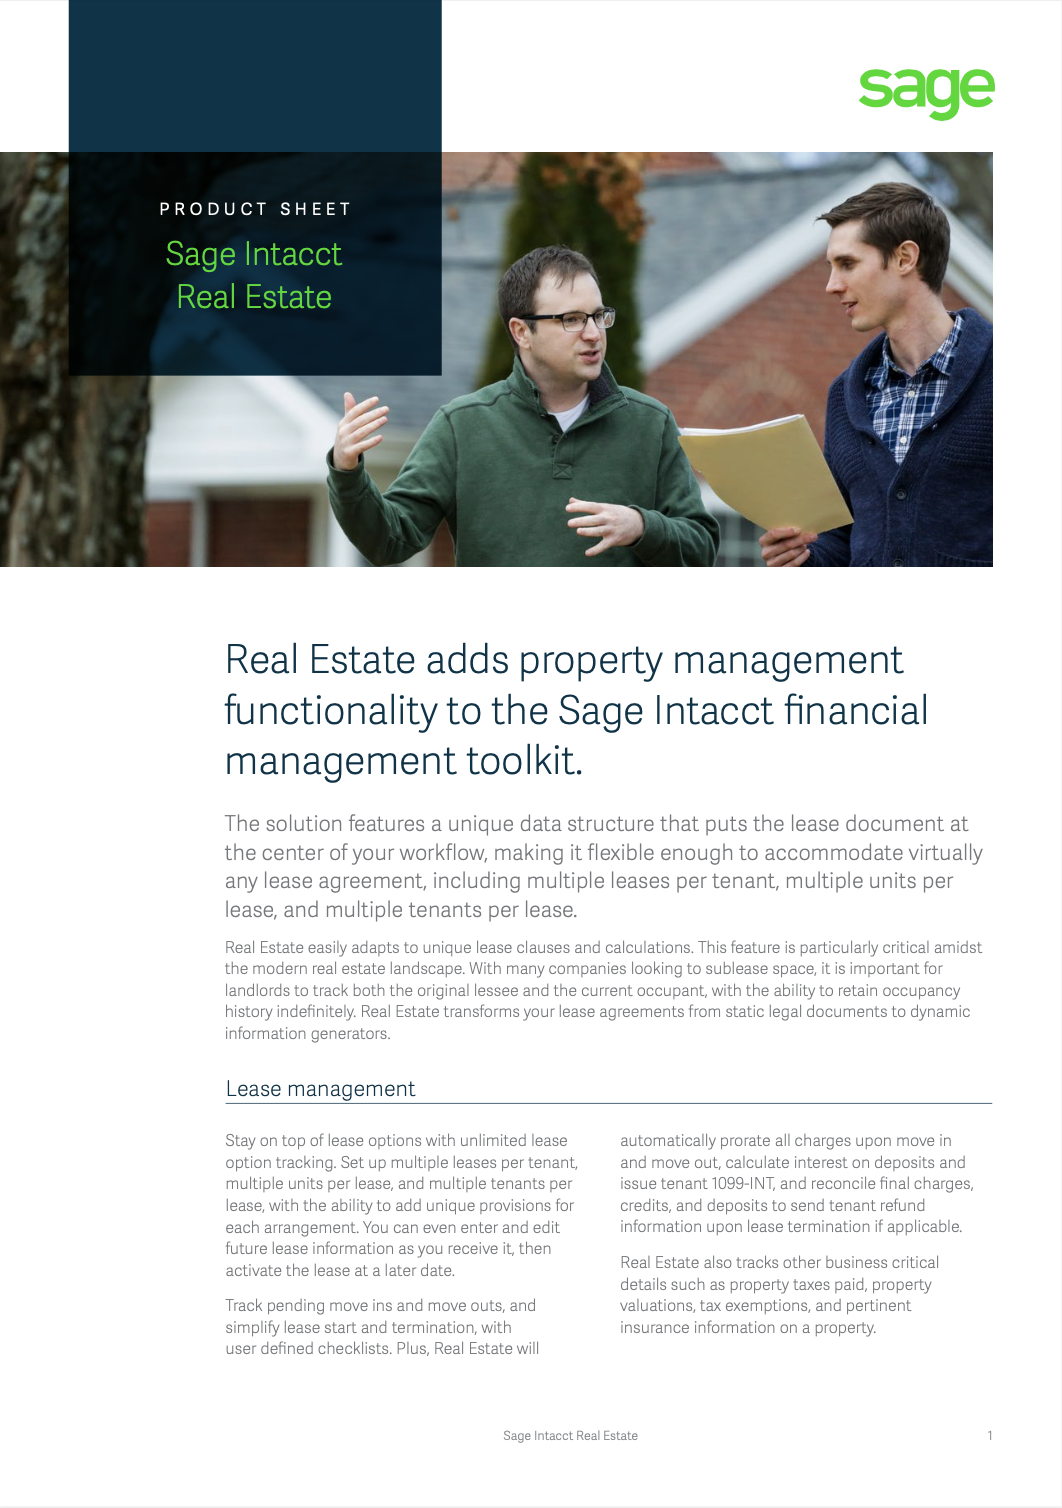 Sage Real Estate Product Info Sheet